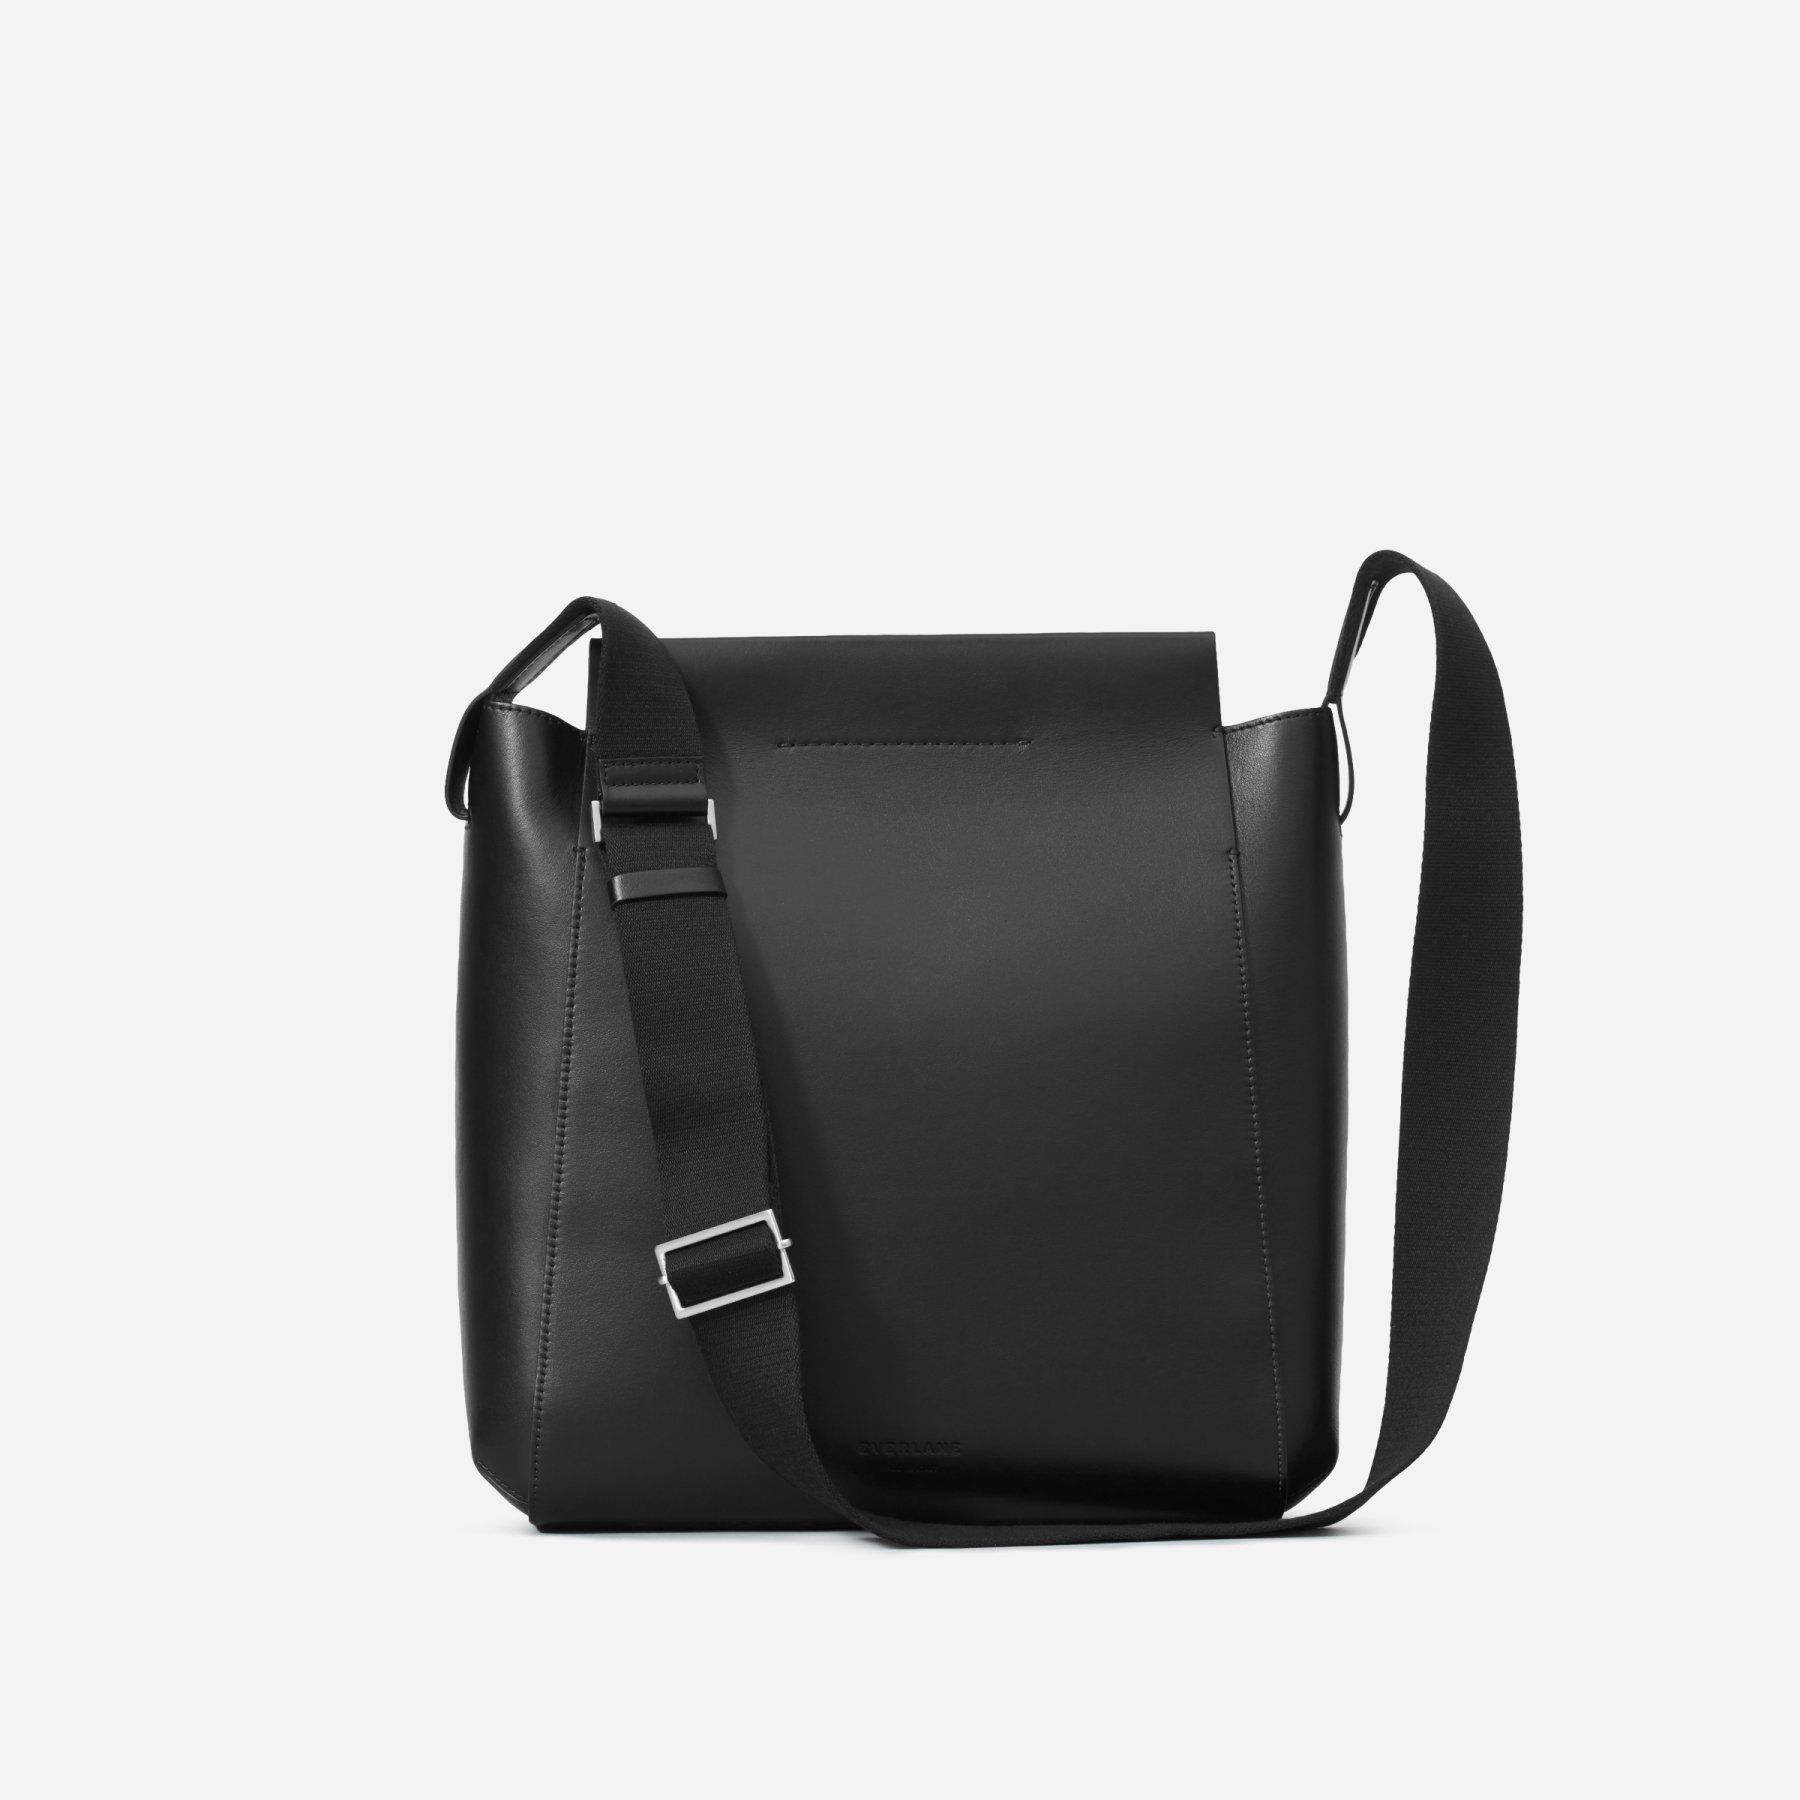 The Form Bag | Everlane